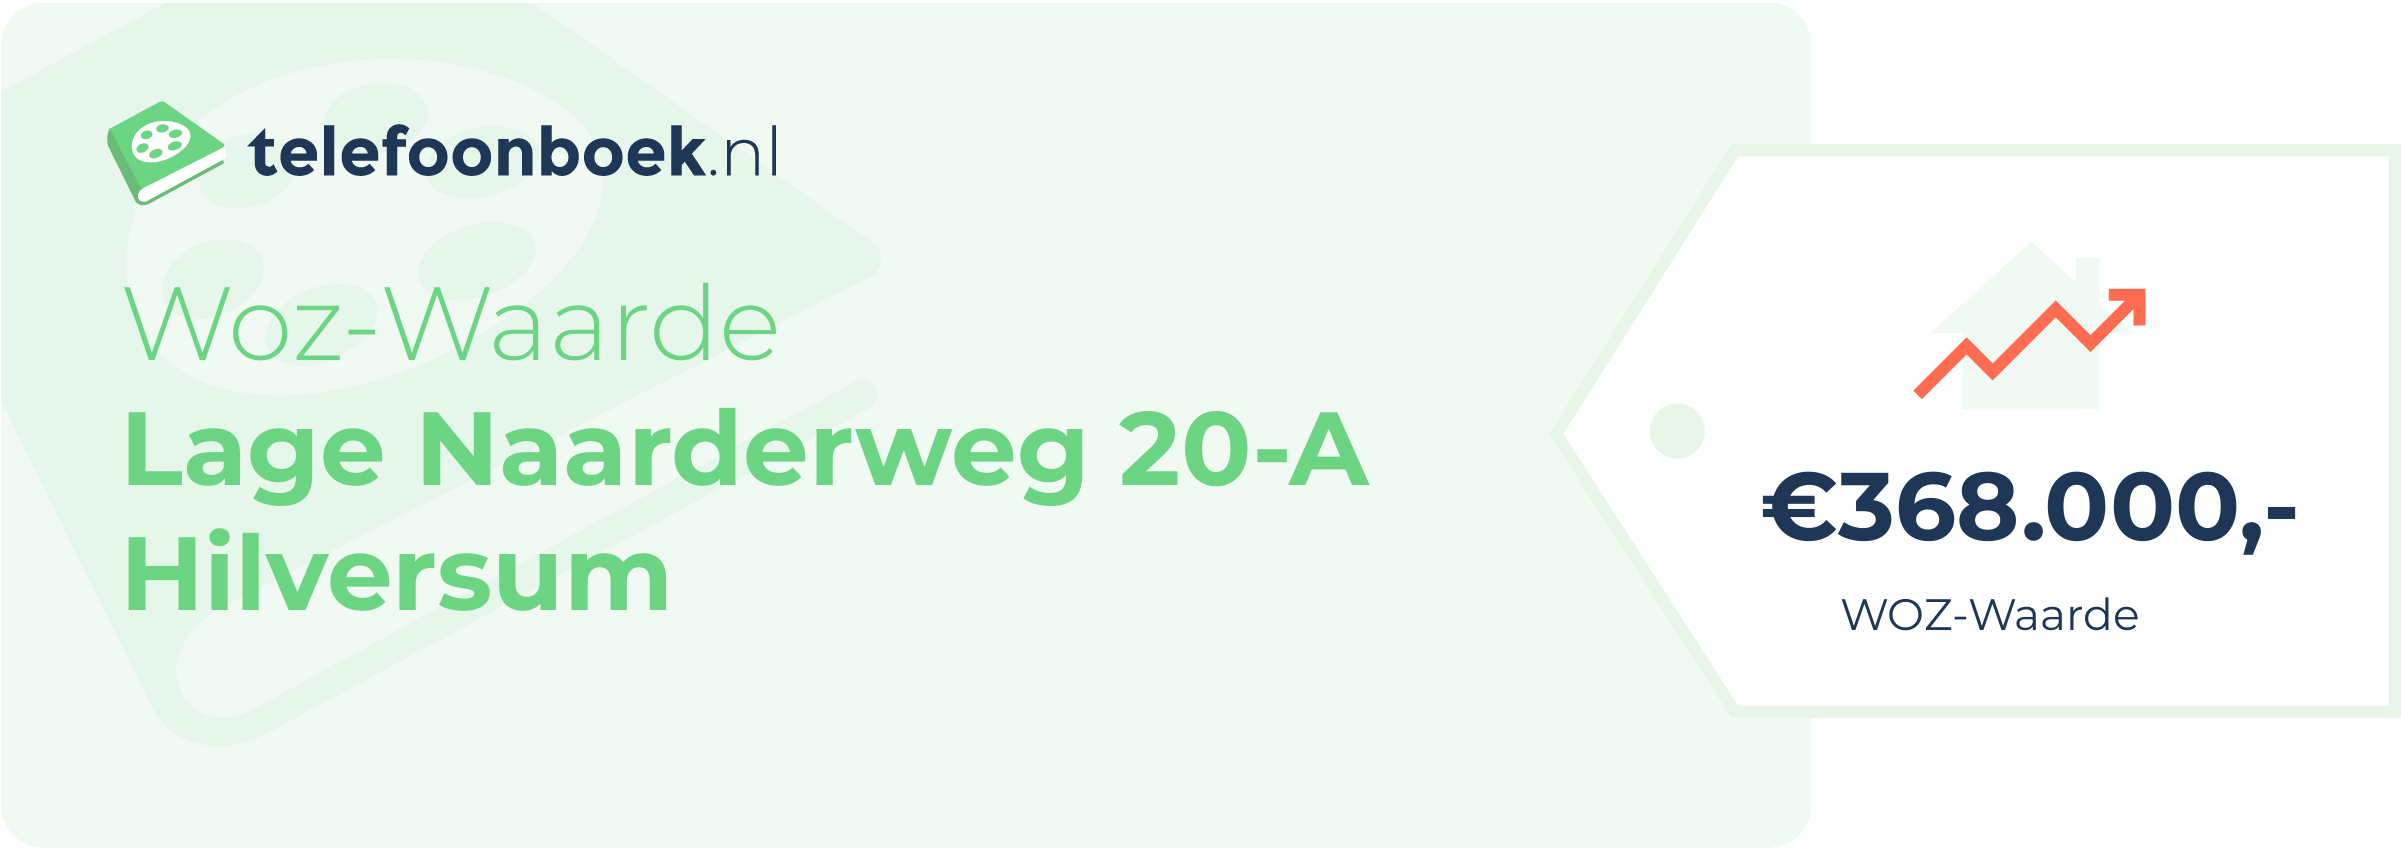 WOZ-waarde Lage Naarderweg 20-A Hilversum